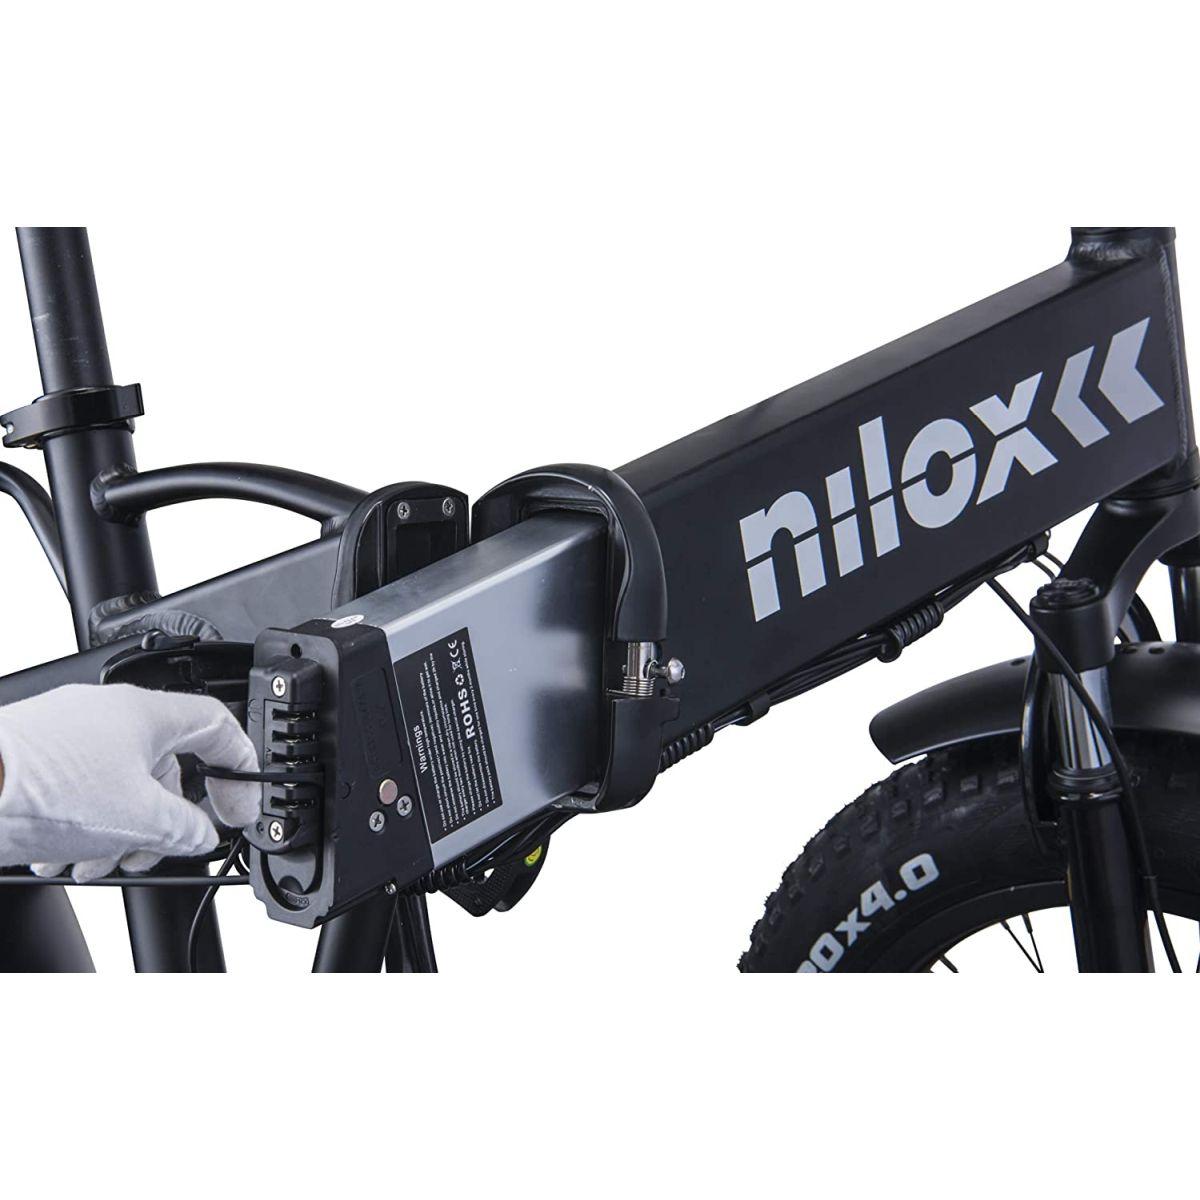 Nilox, E-Bike J4, Bici Elettrica con Pedalata Assistita, Motore Brushless High Speed da 36 V, 250 W e Batteria Removibile LG da 36 V, 8 Ah, Gomme Fat da 20" e Doppio Freno a Disco